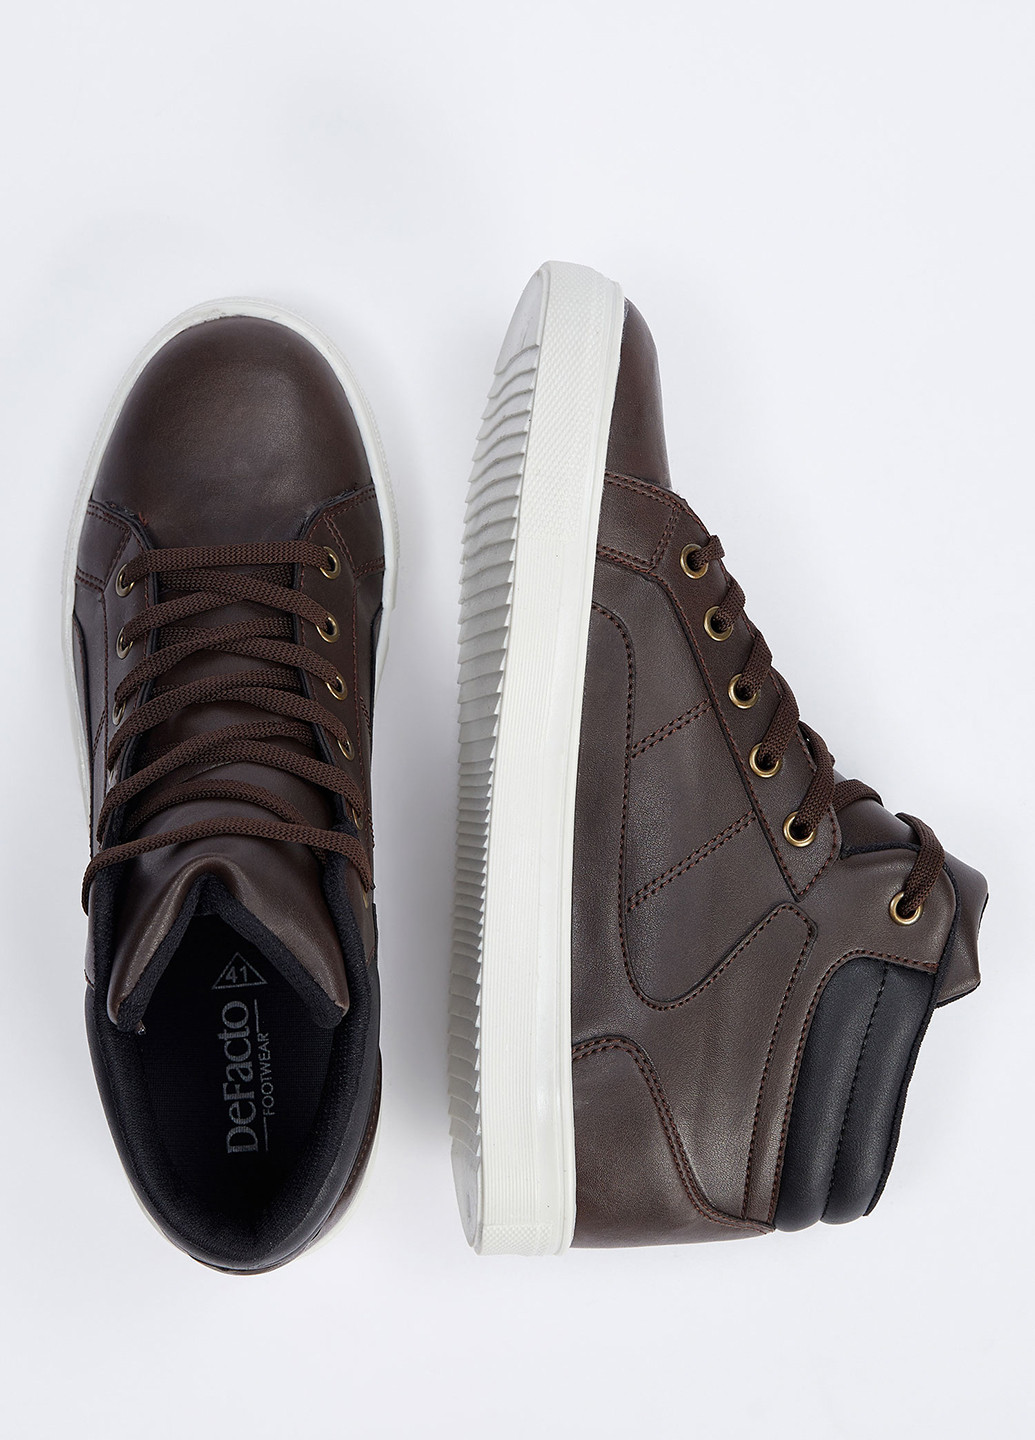 Темно-коричневые ботинки DeFacto